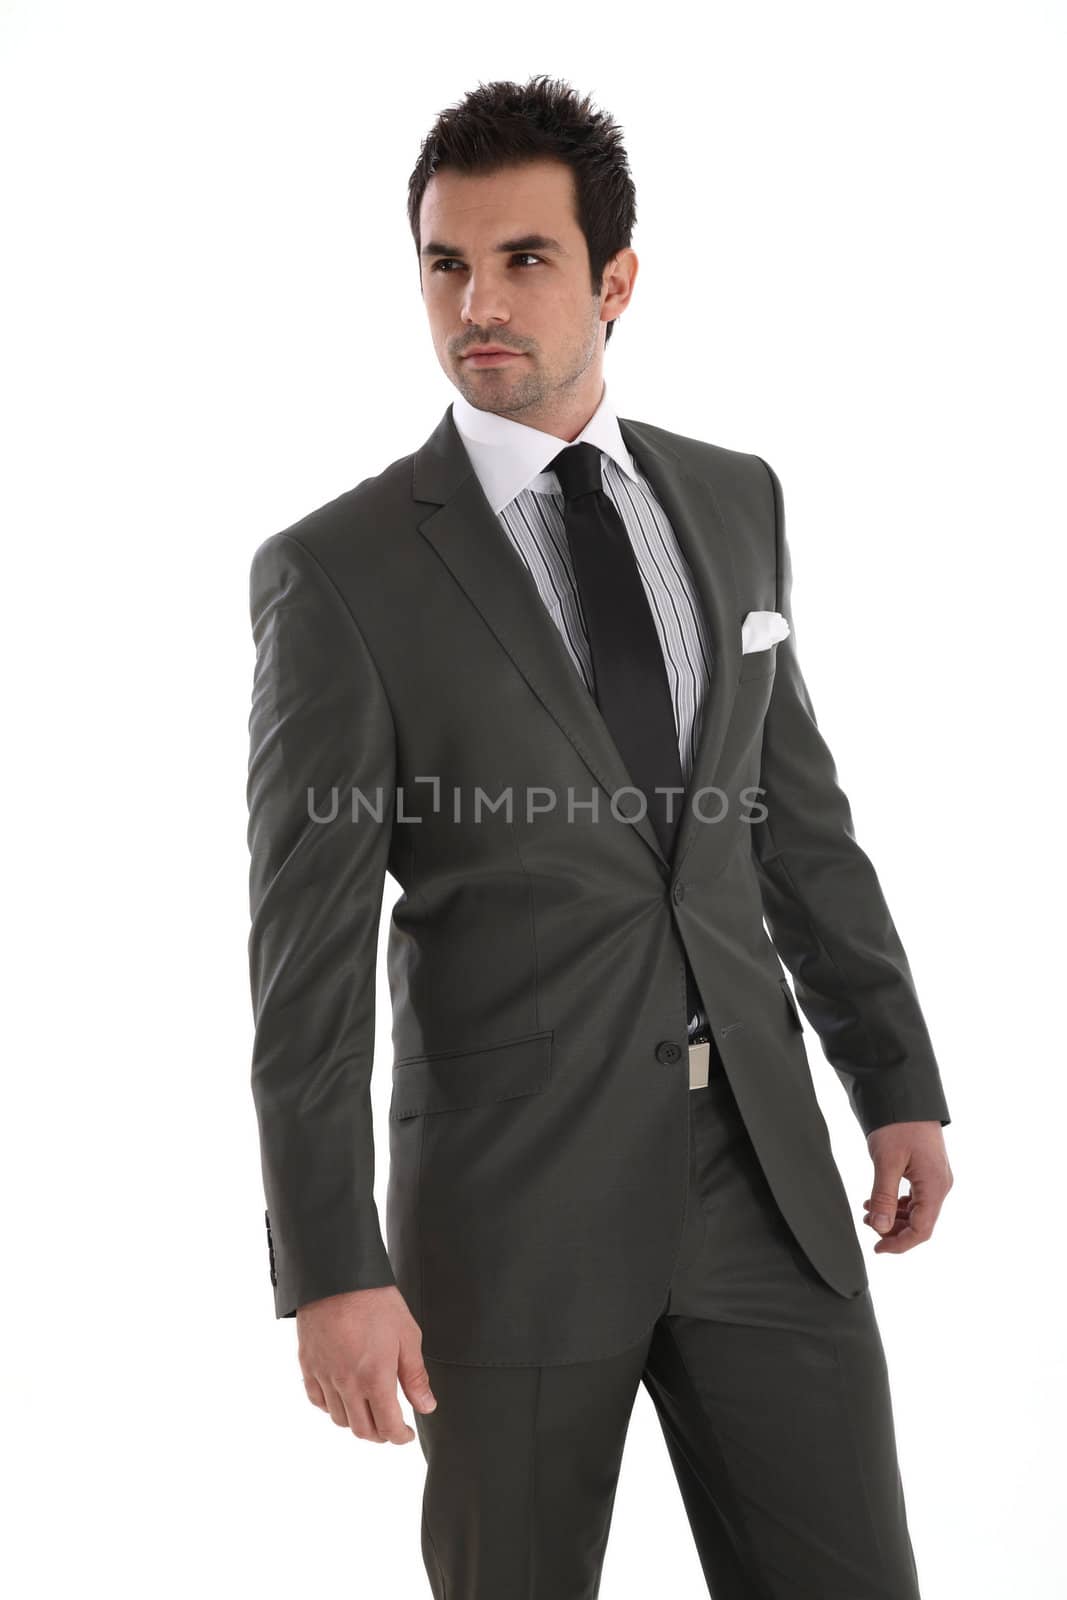 Elegant handsome man in suit by shamtor